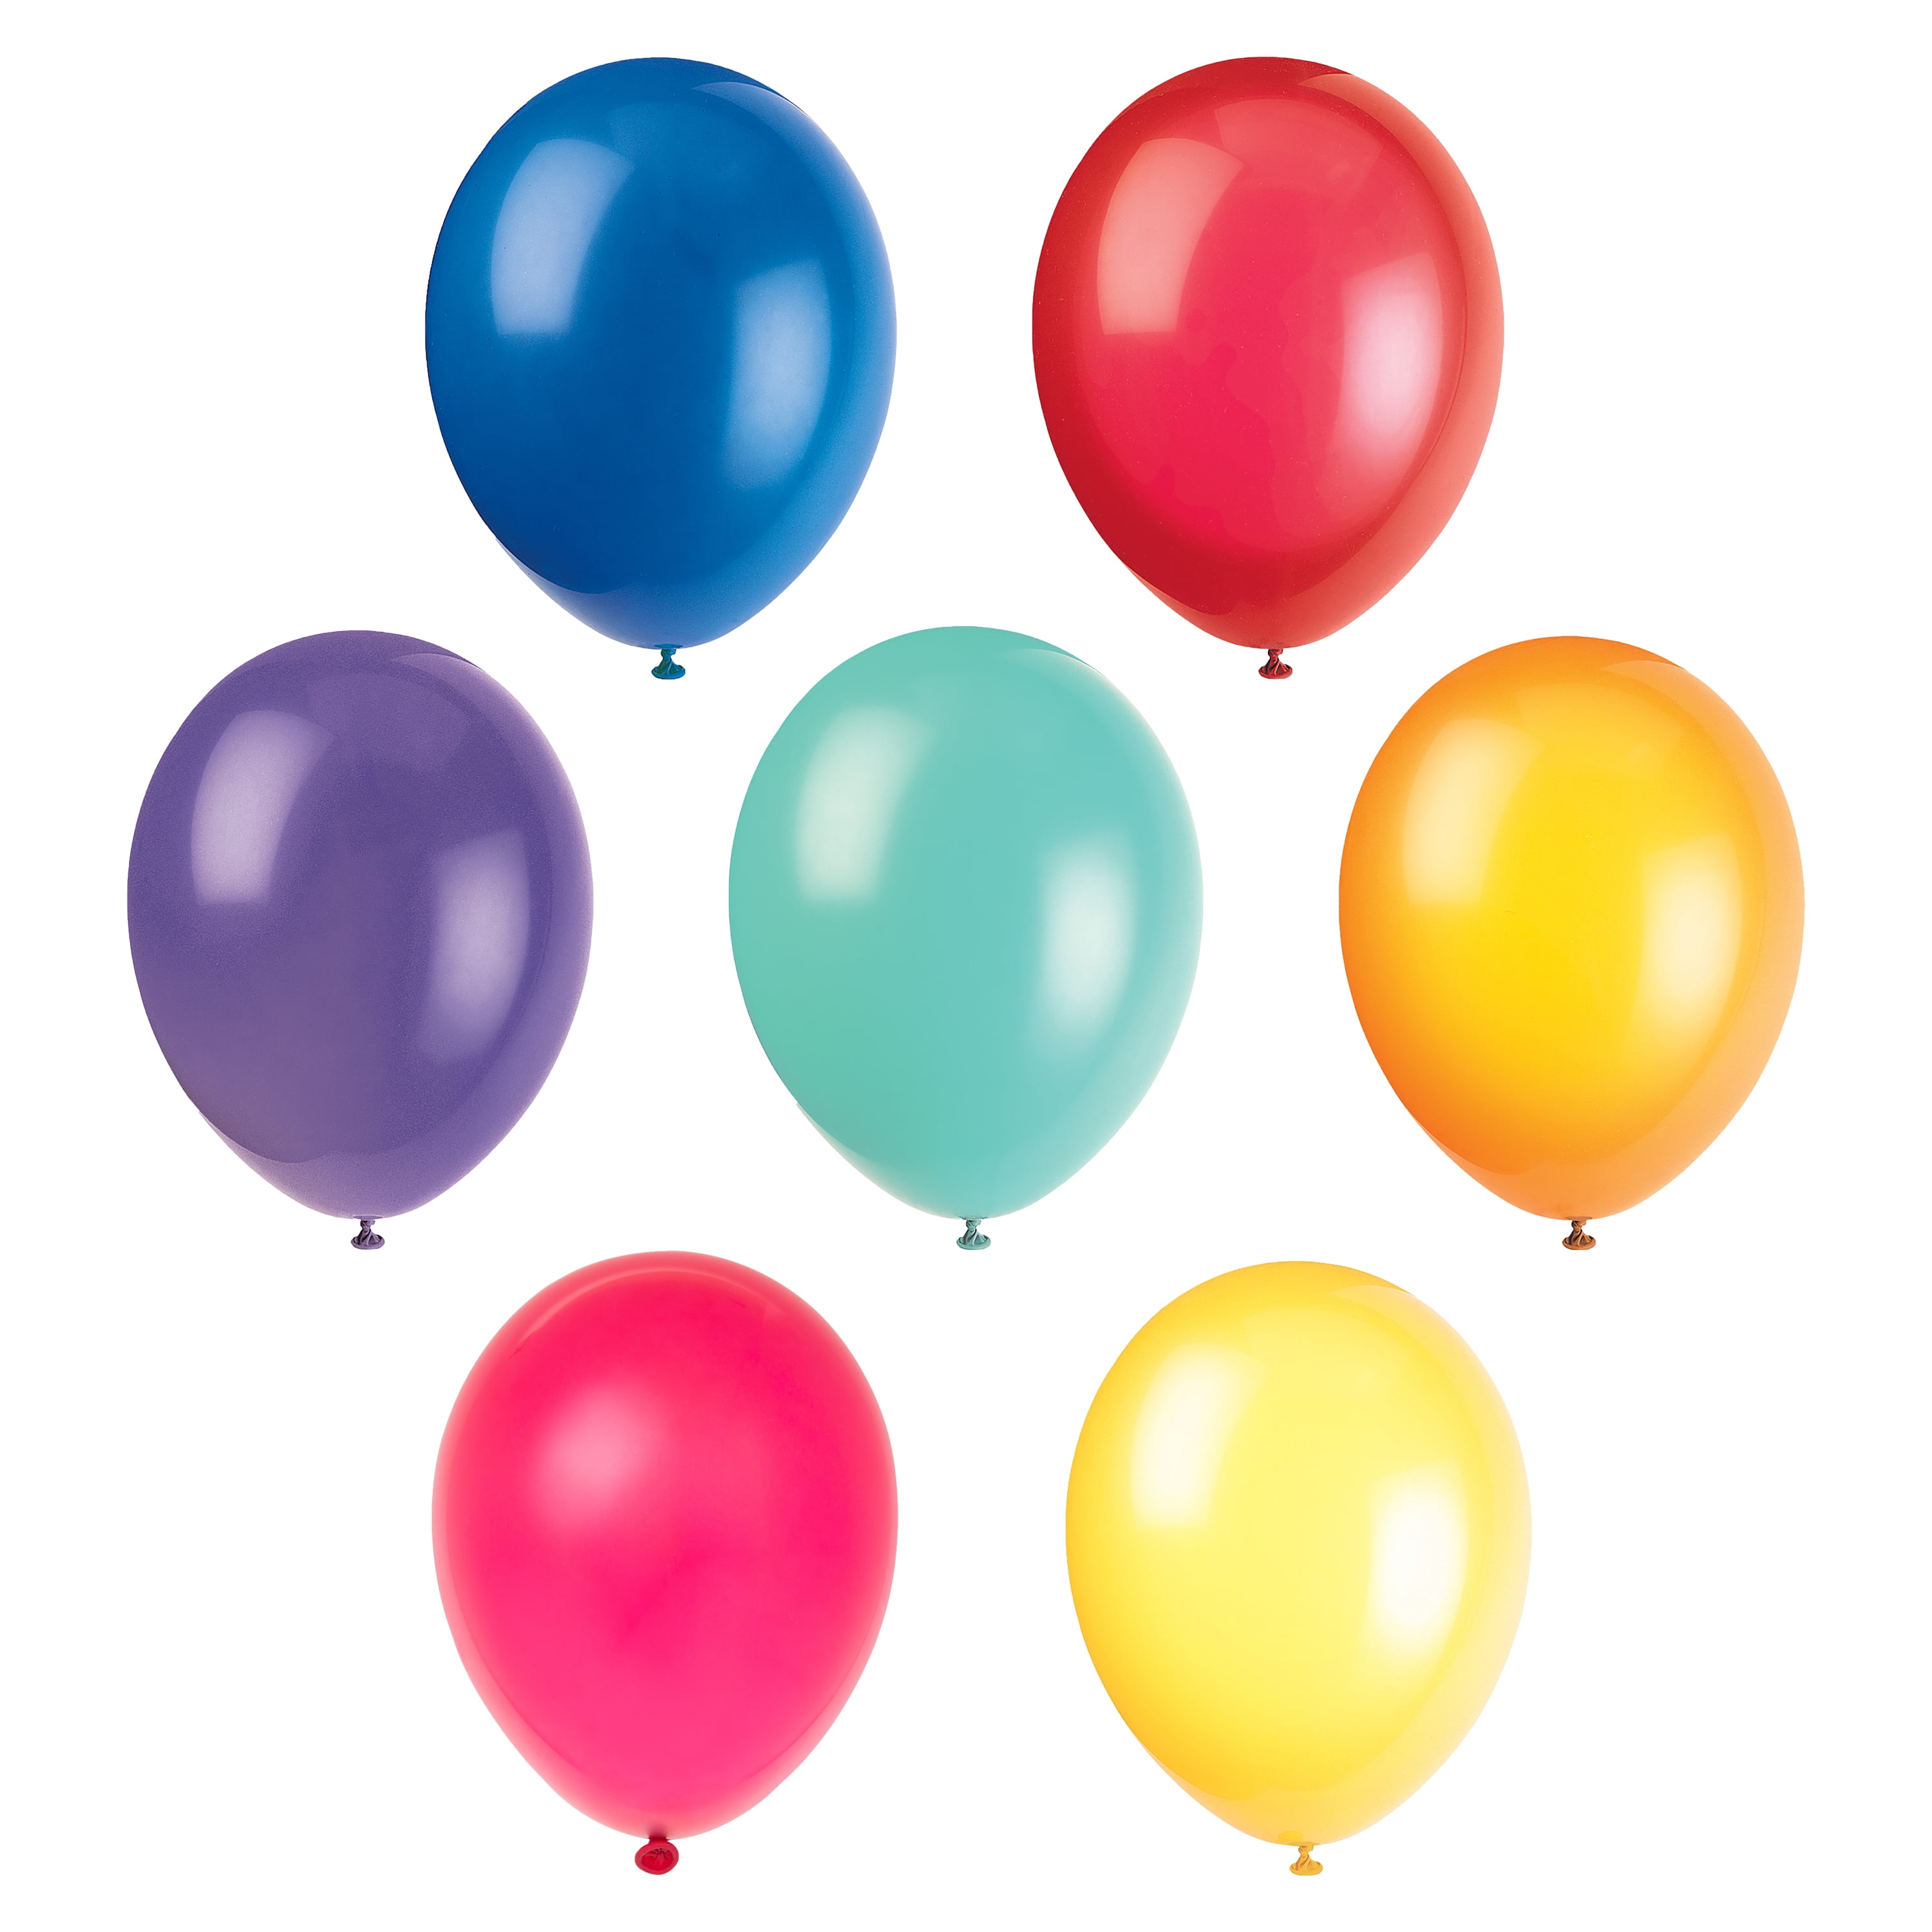 25 X Latex PLAIN BALOON BALLONS helium BALLOONS Quality Party Birthday Colourful 